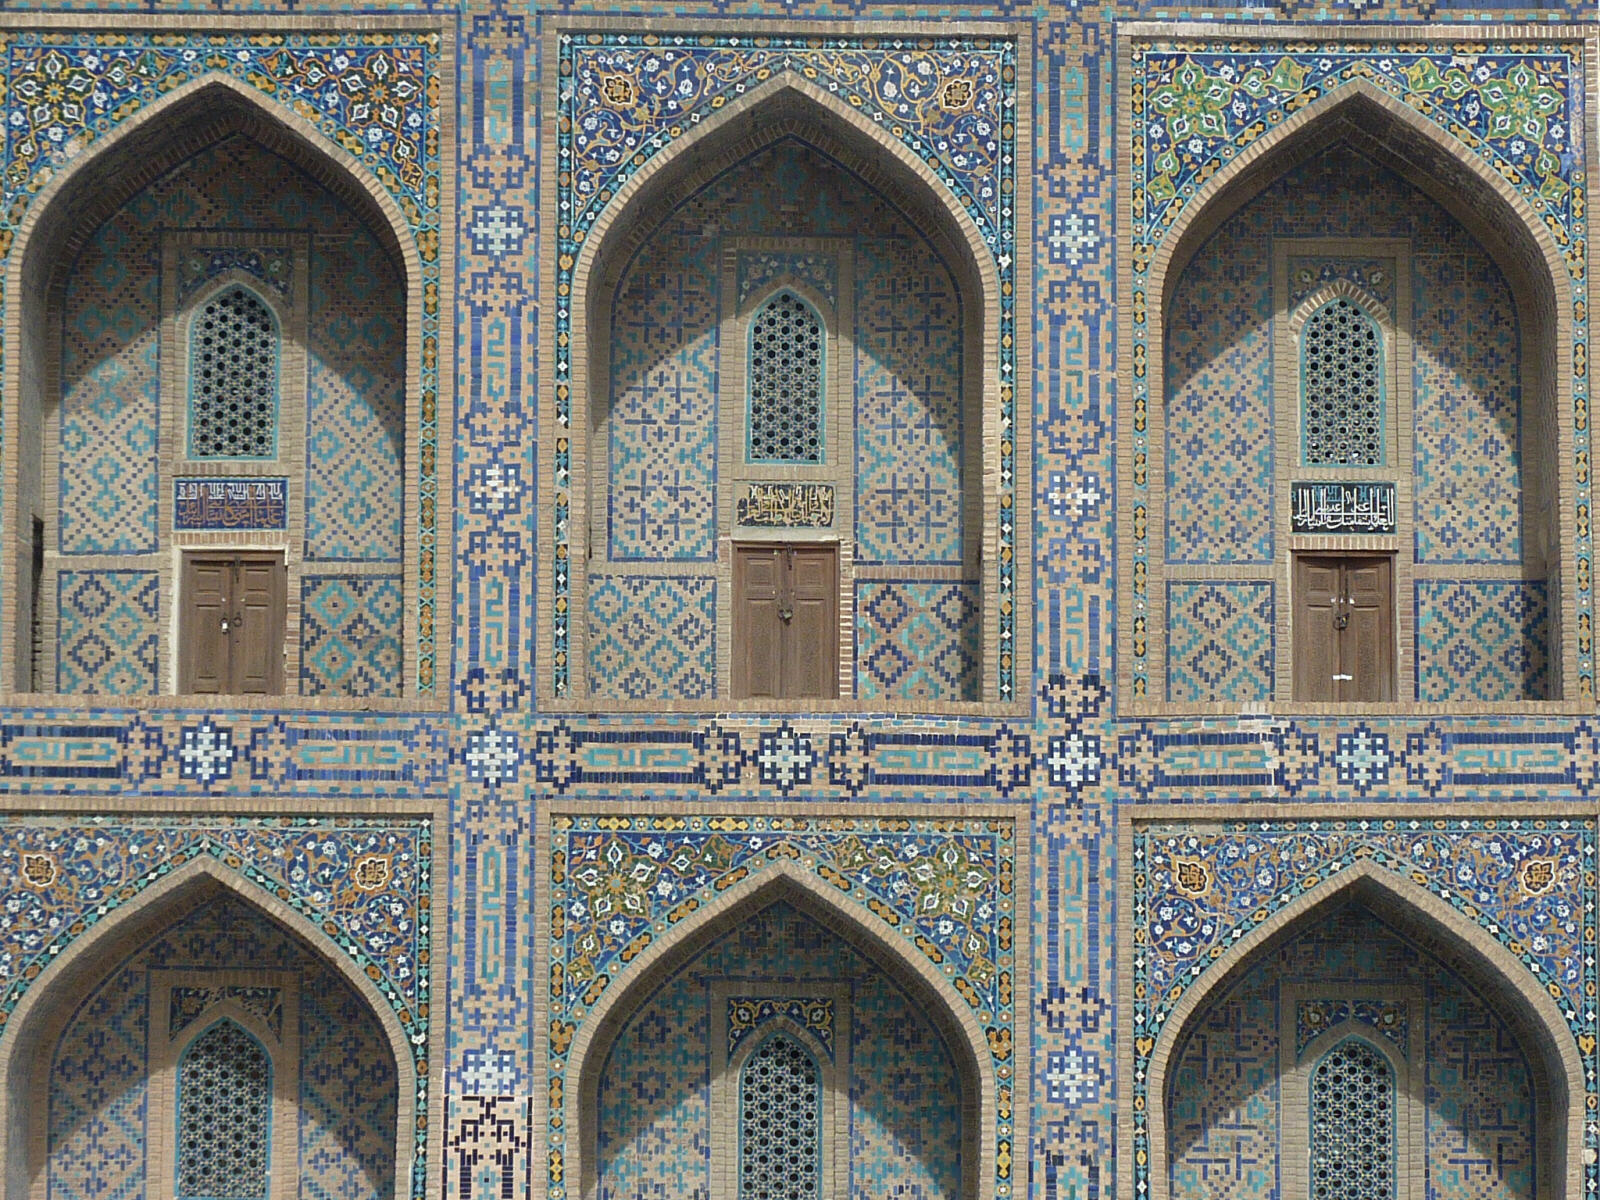 Tile-work in the Registan in Samarkand, Uzbekistan